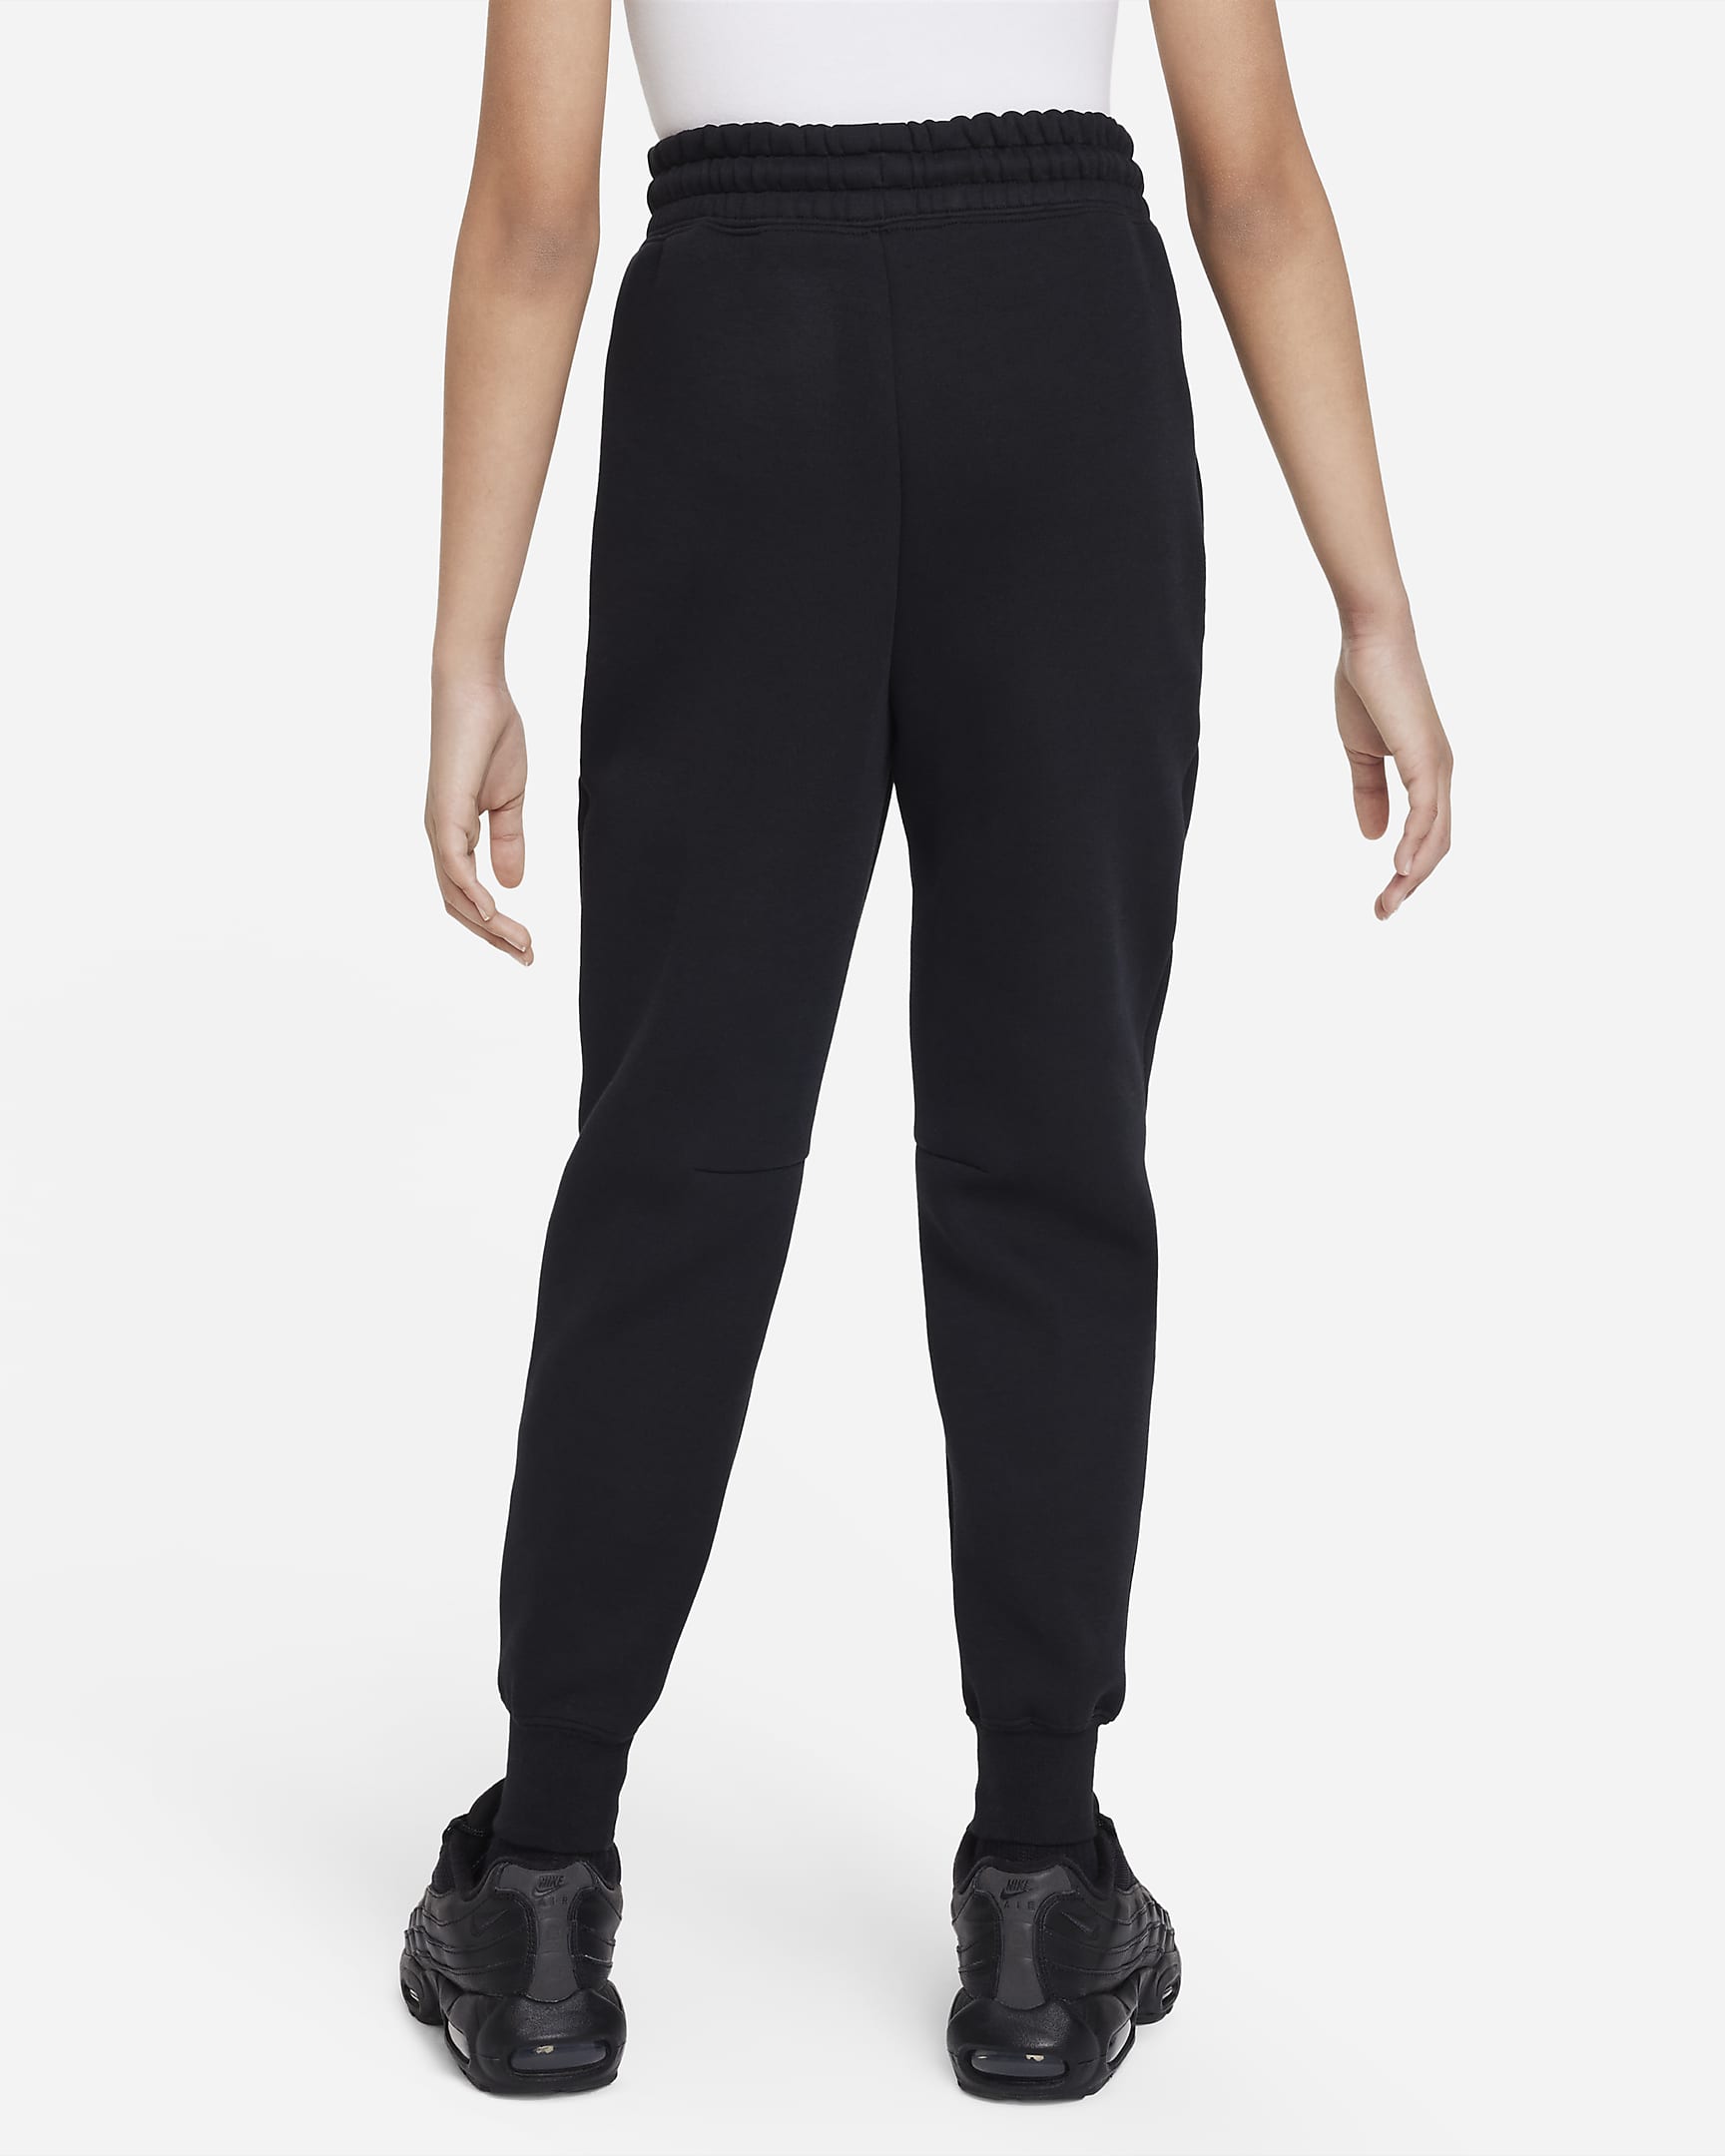 Pantaloni jogger Nike Sportswear Tech Fleece – Ragazza - Nero/Nero/Nero